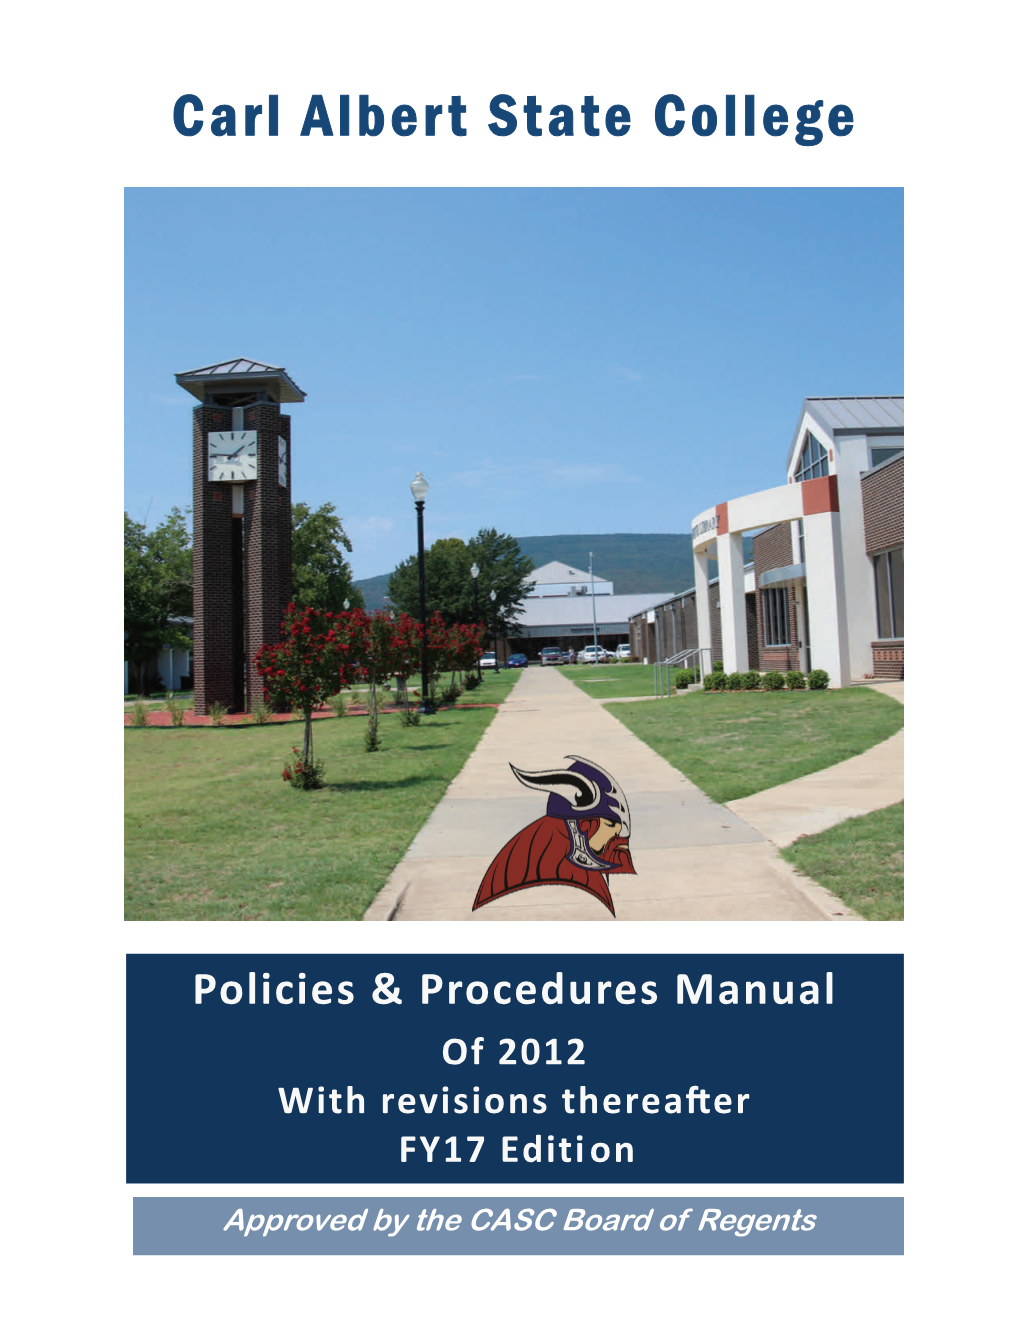 Policies & Procedures Manual